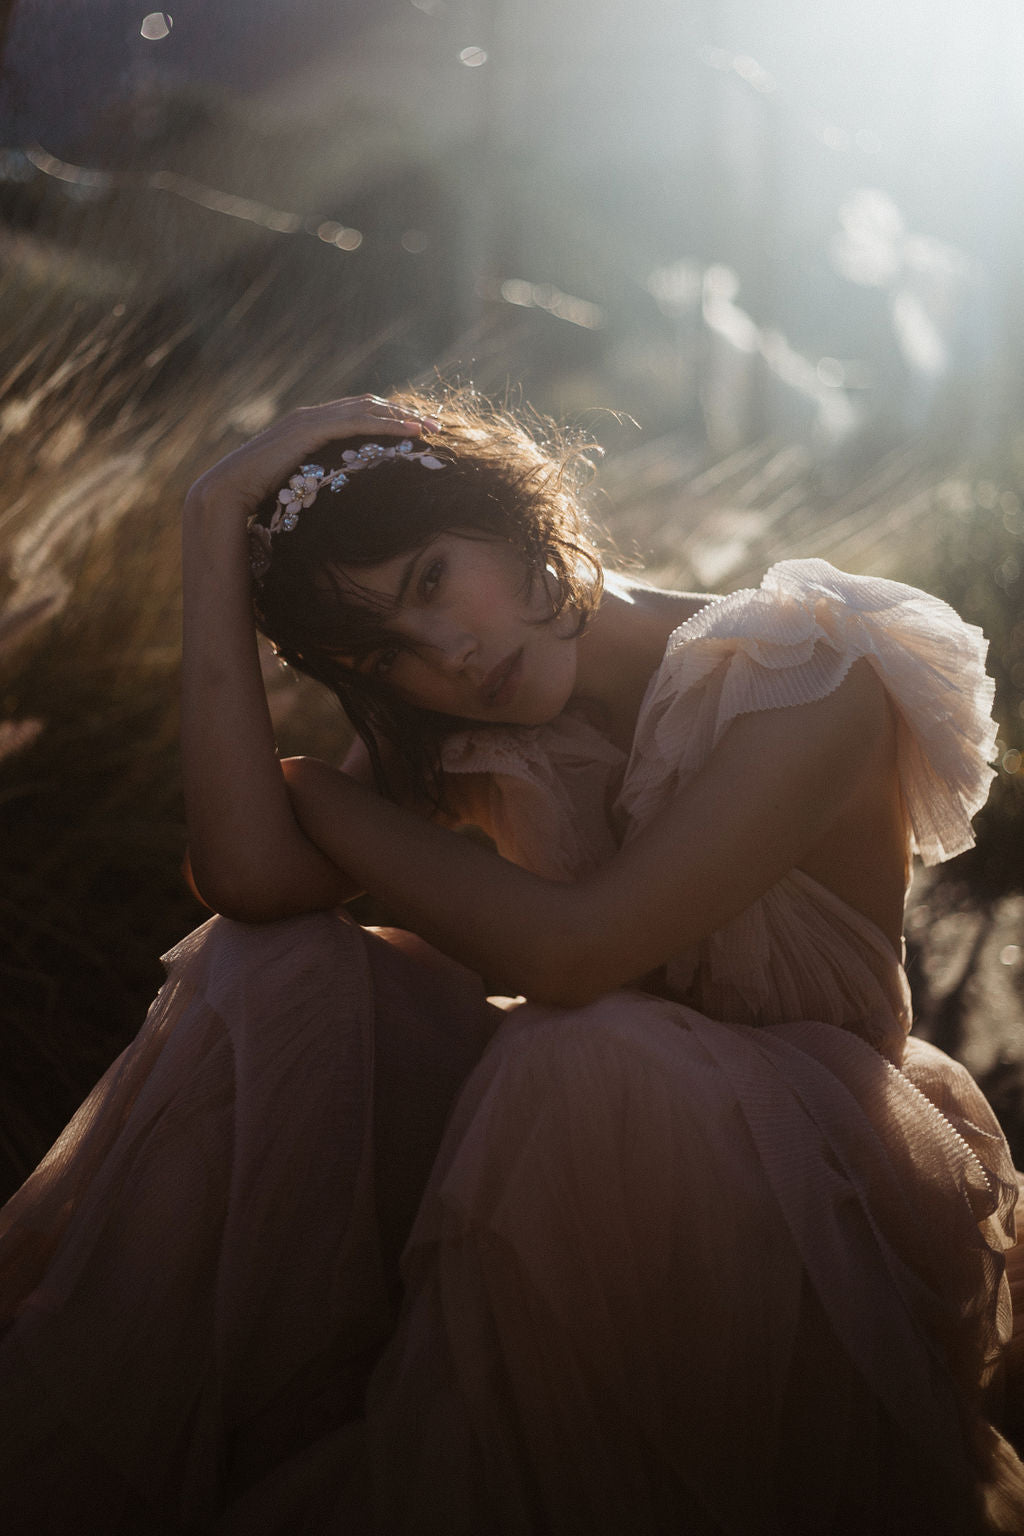 Keats | Dress | Sadie Bosworth Atelier